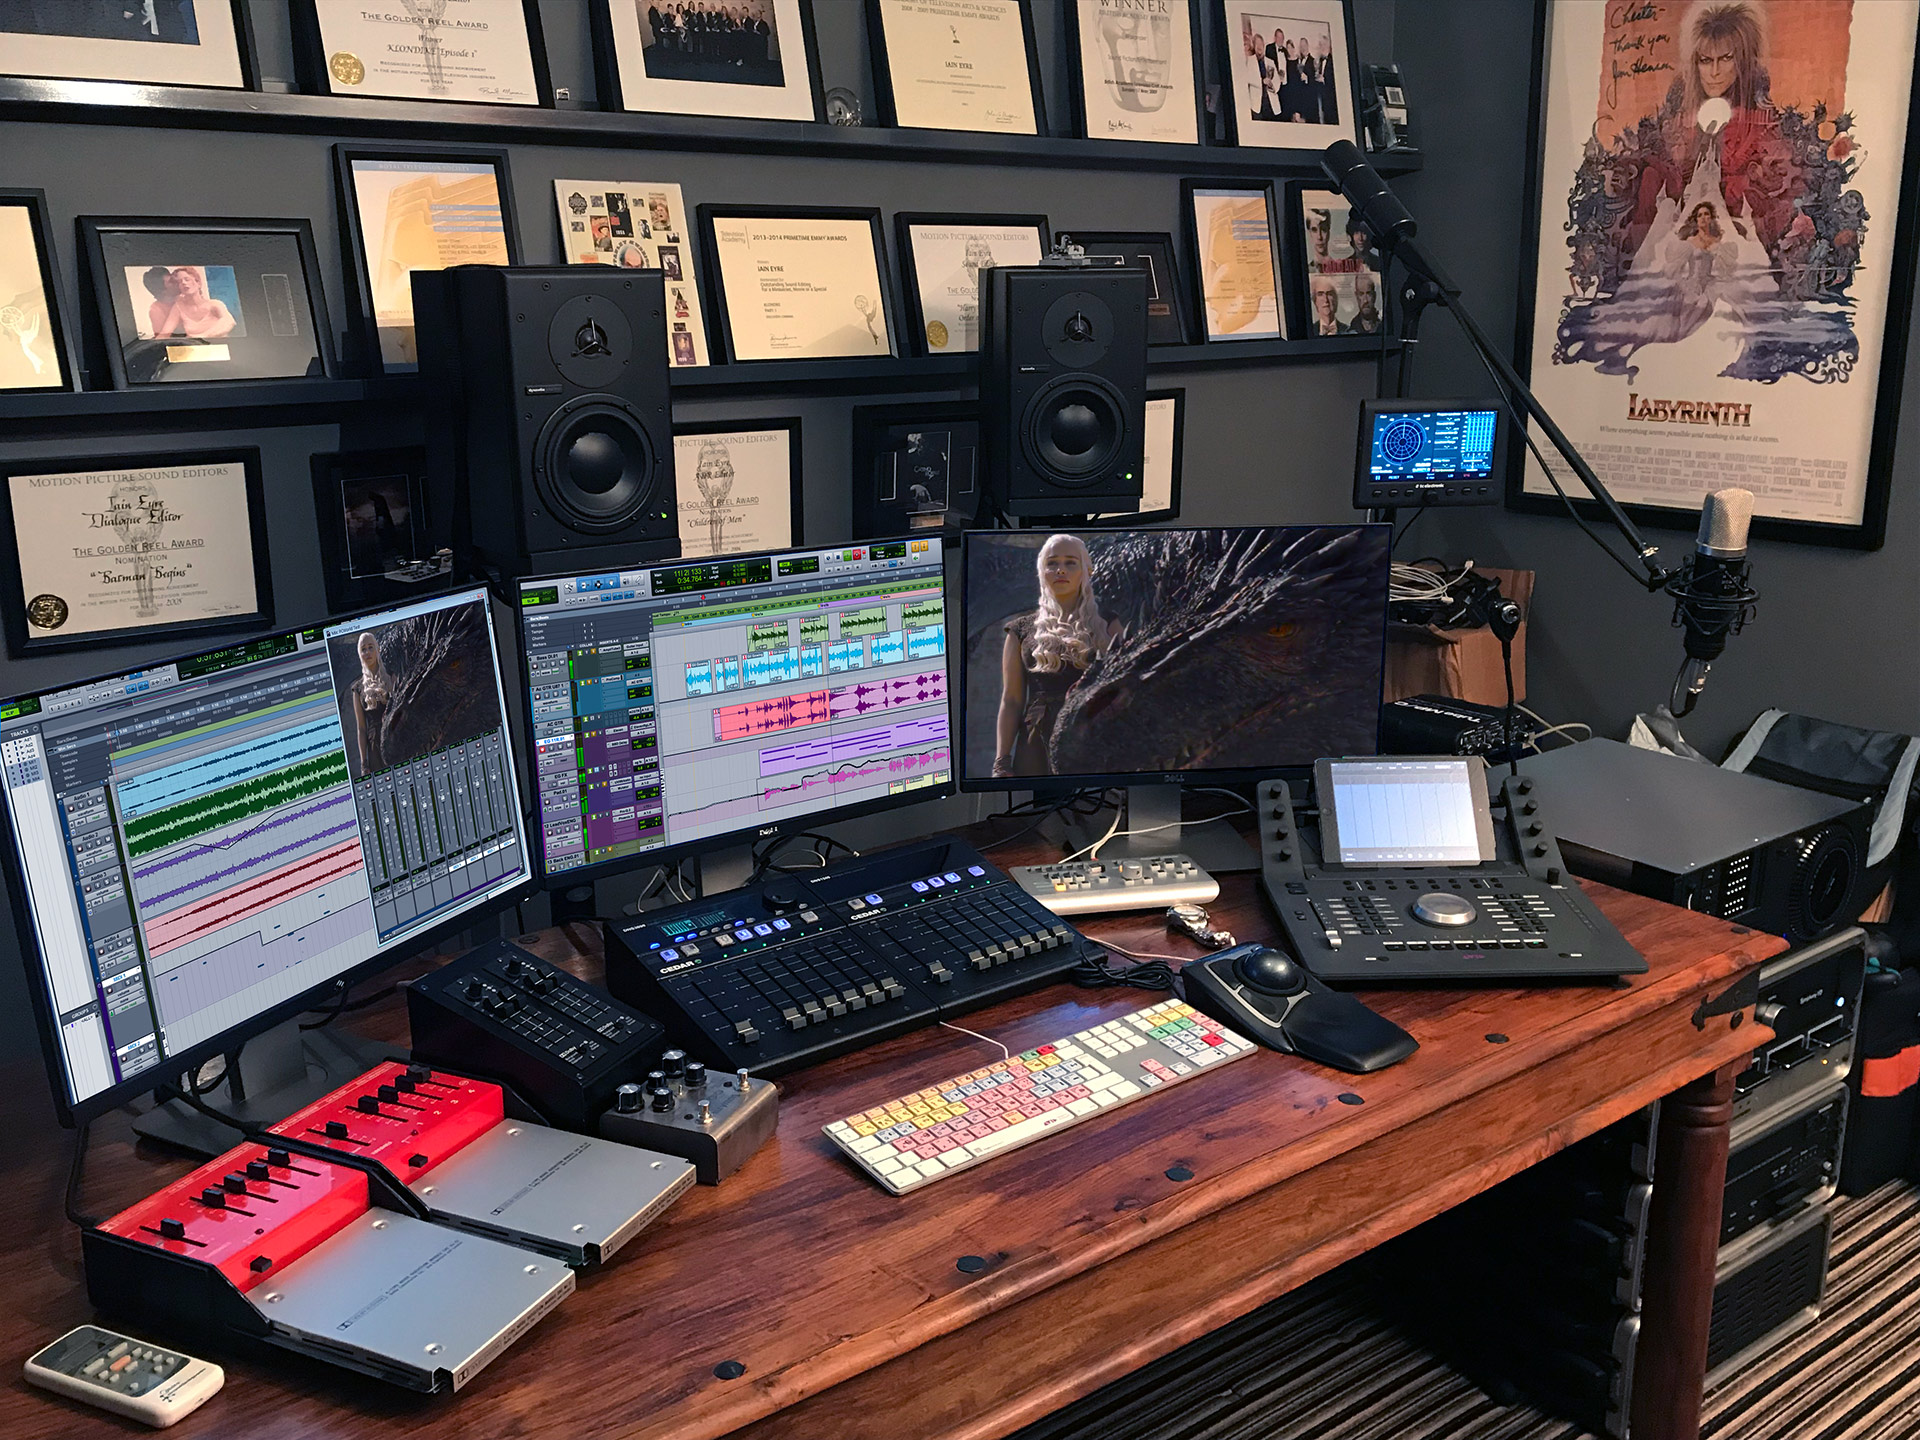 Iain Eyre's home studio set-up